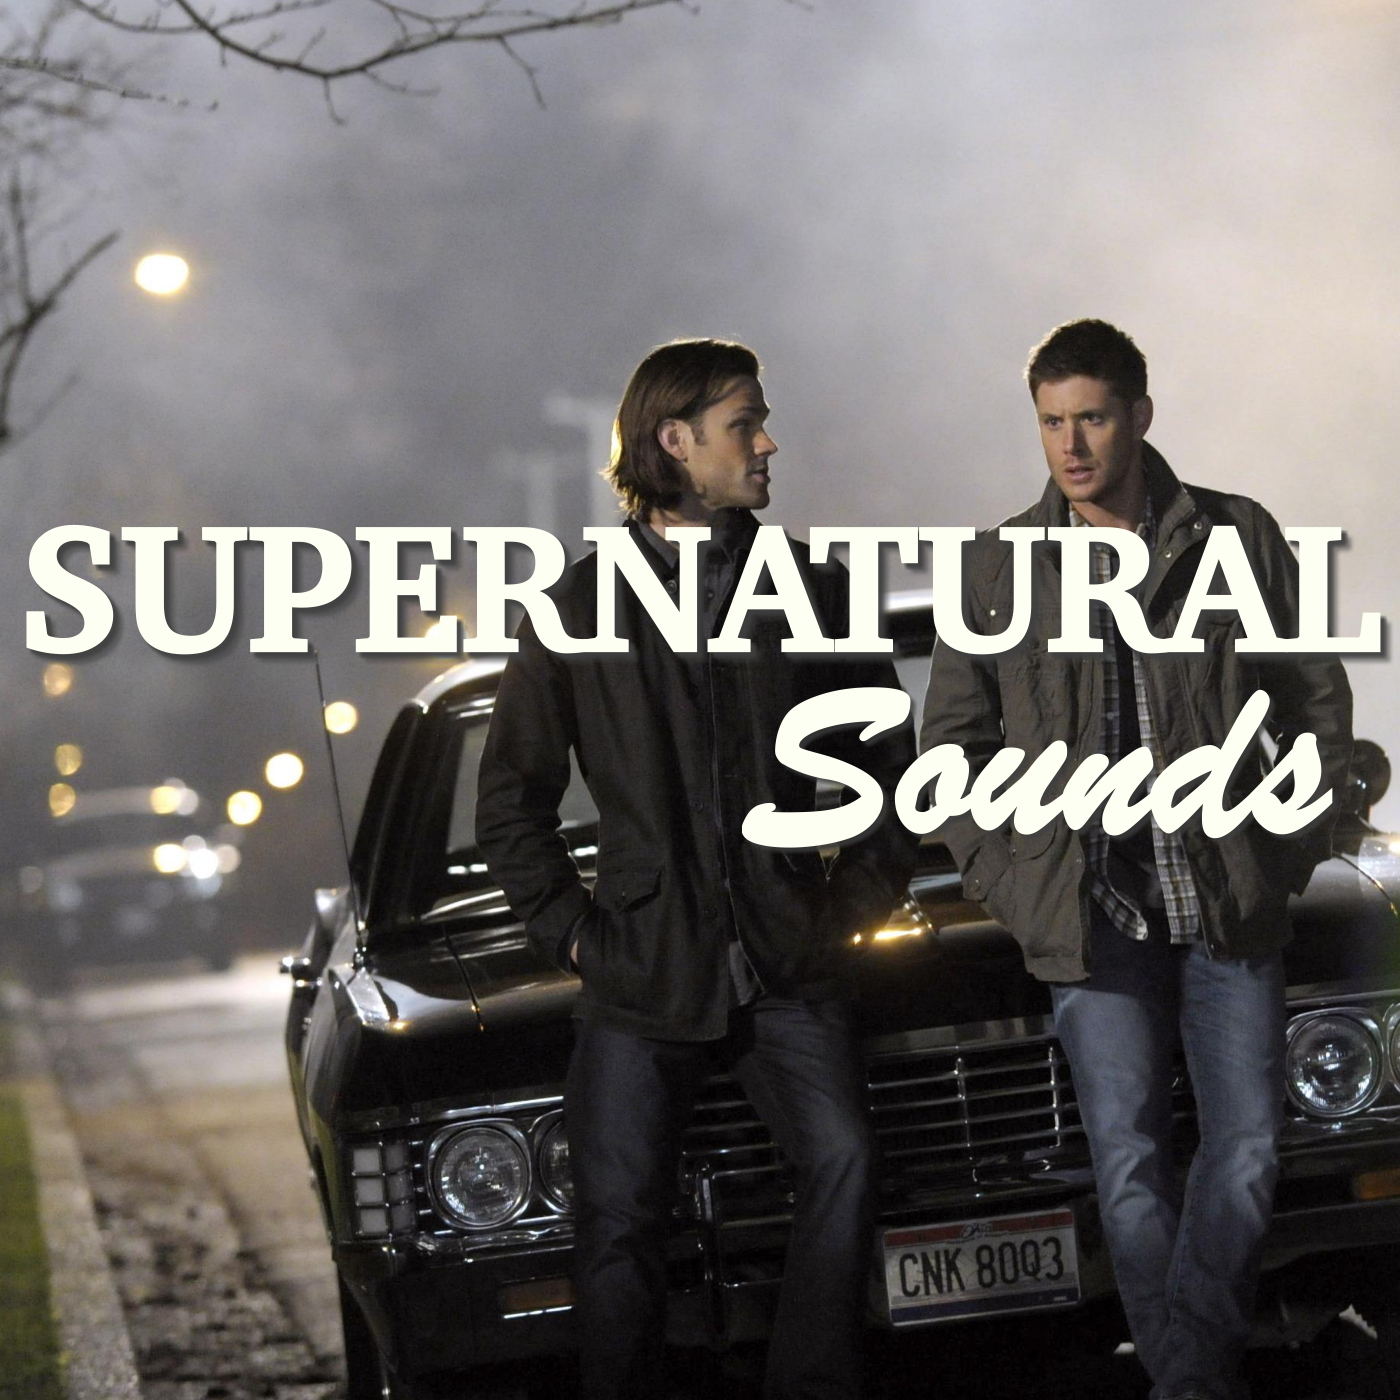 'Supernatural' Sounds